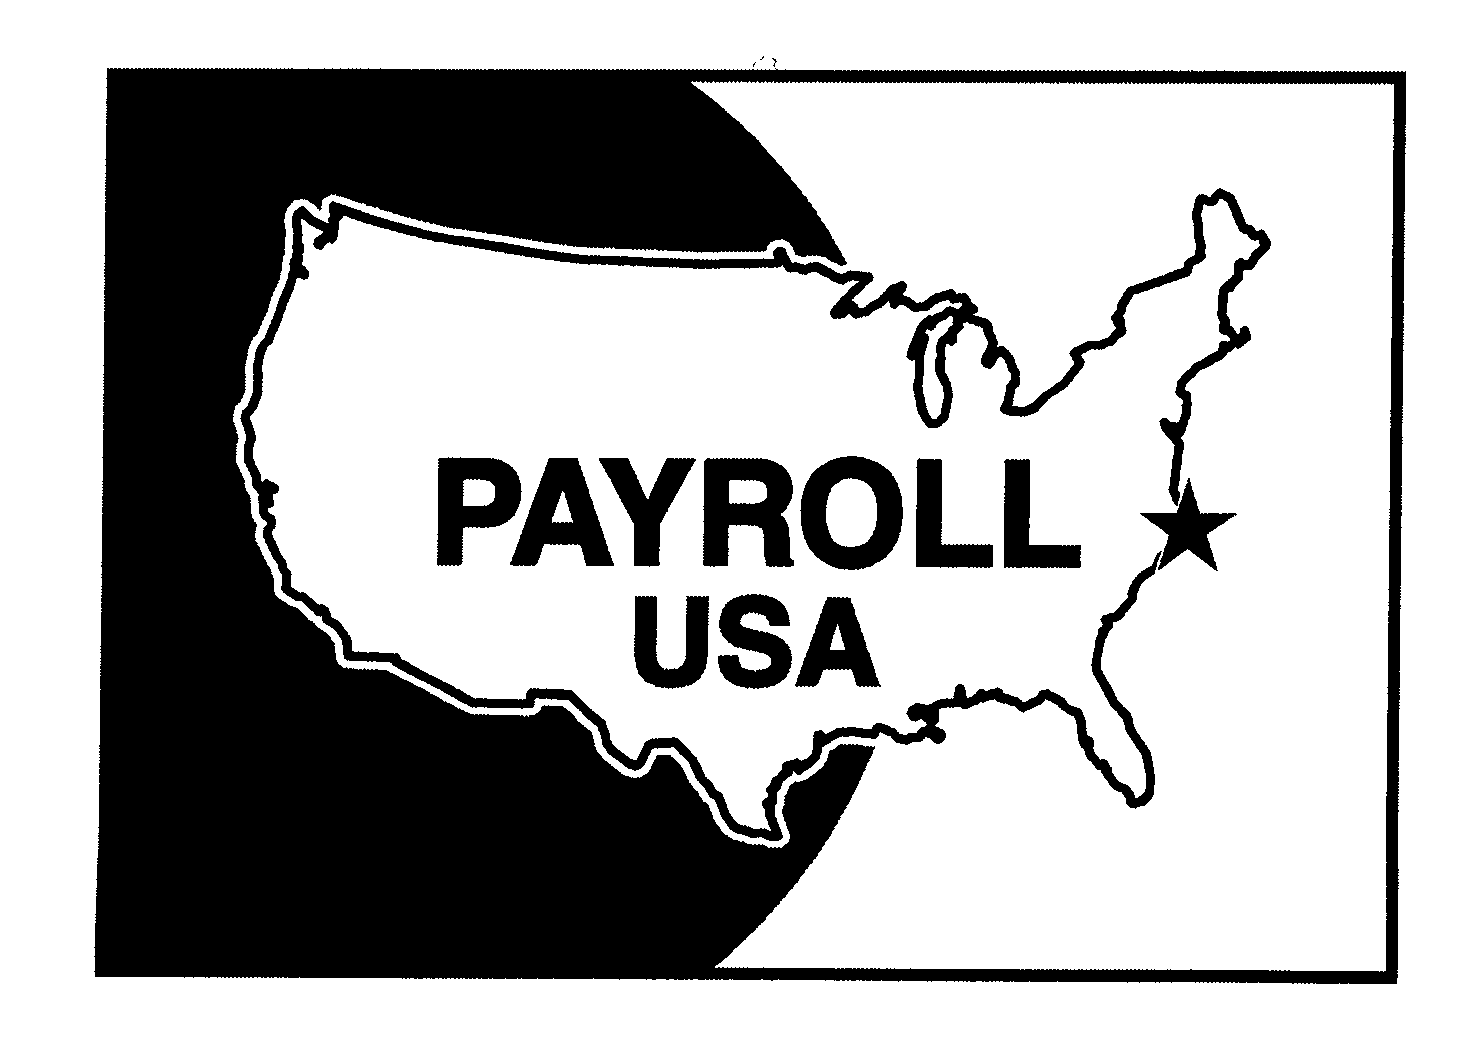  PAYROLL USA